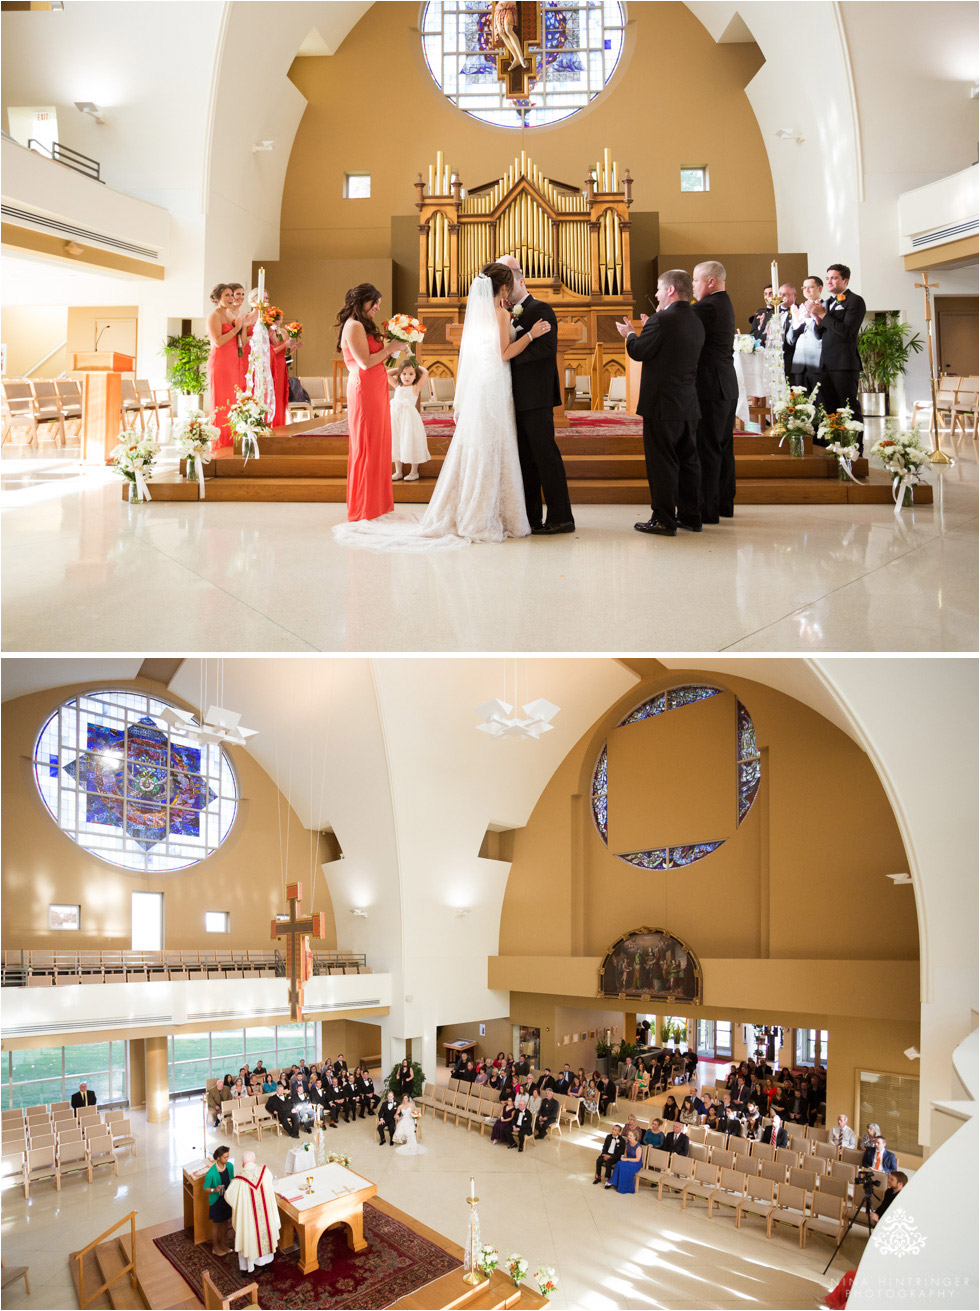 Wedding ceremony at Saint Josephs University campus in Philadelphia, Pennsylvania - Blog of Nina Hintringer Photography - Wedding Photography, Wedding Reportage and Destination Weddings